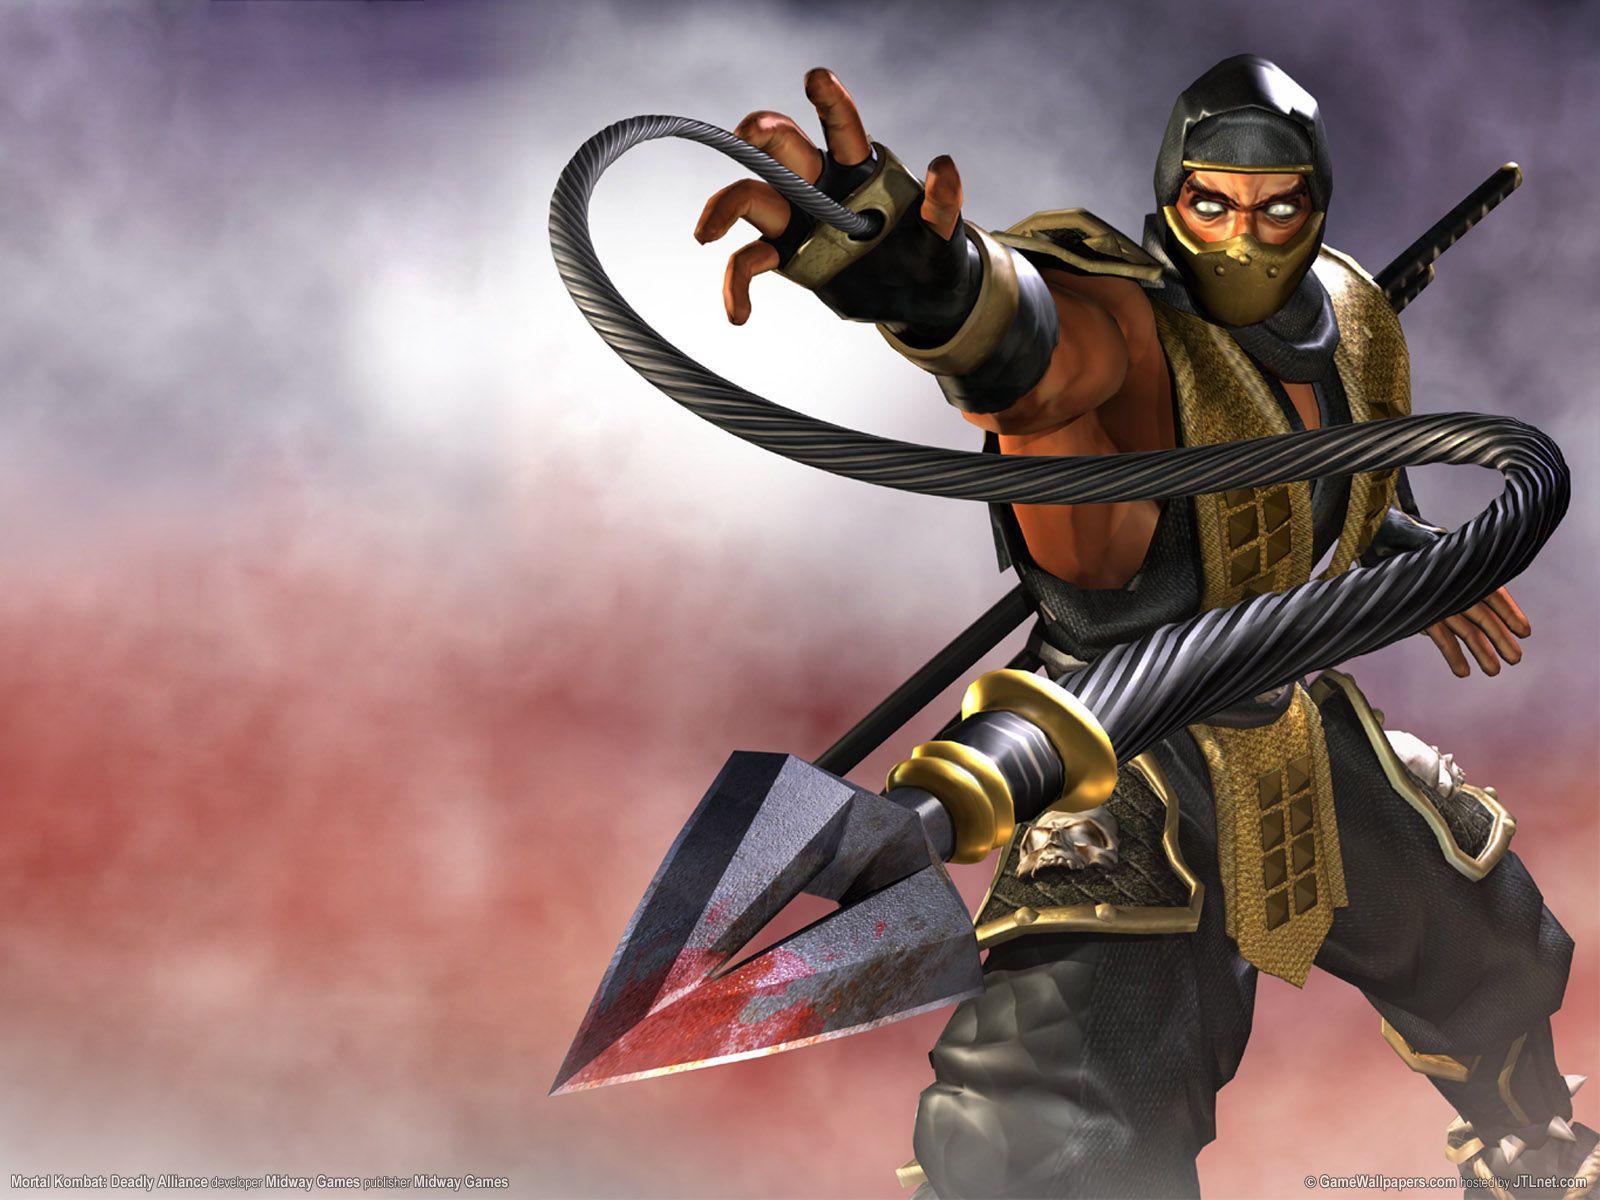 Mortal Kombat Wallpaper